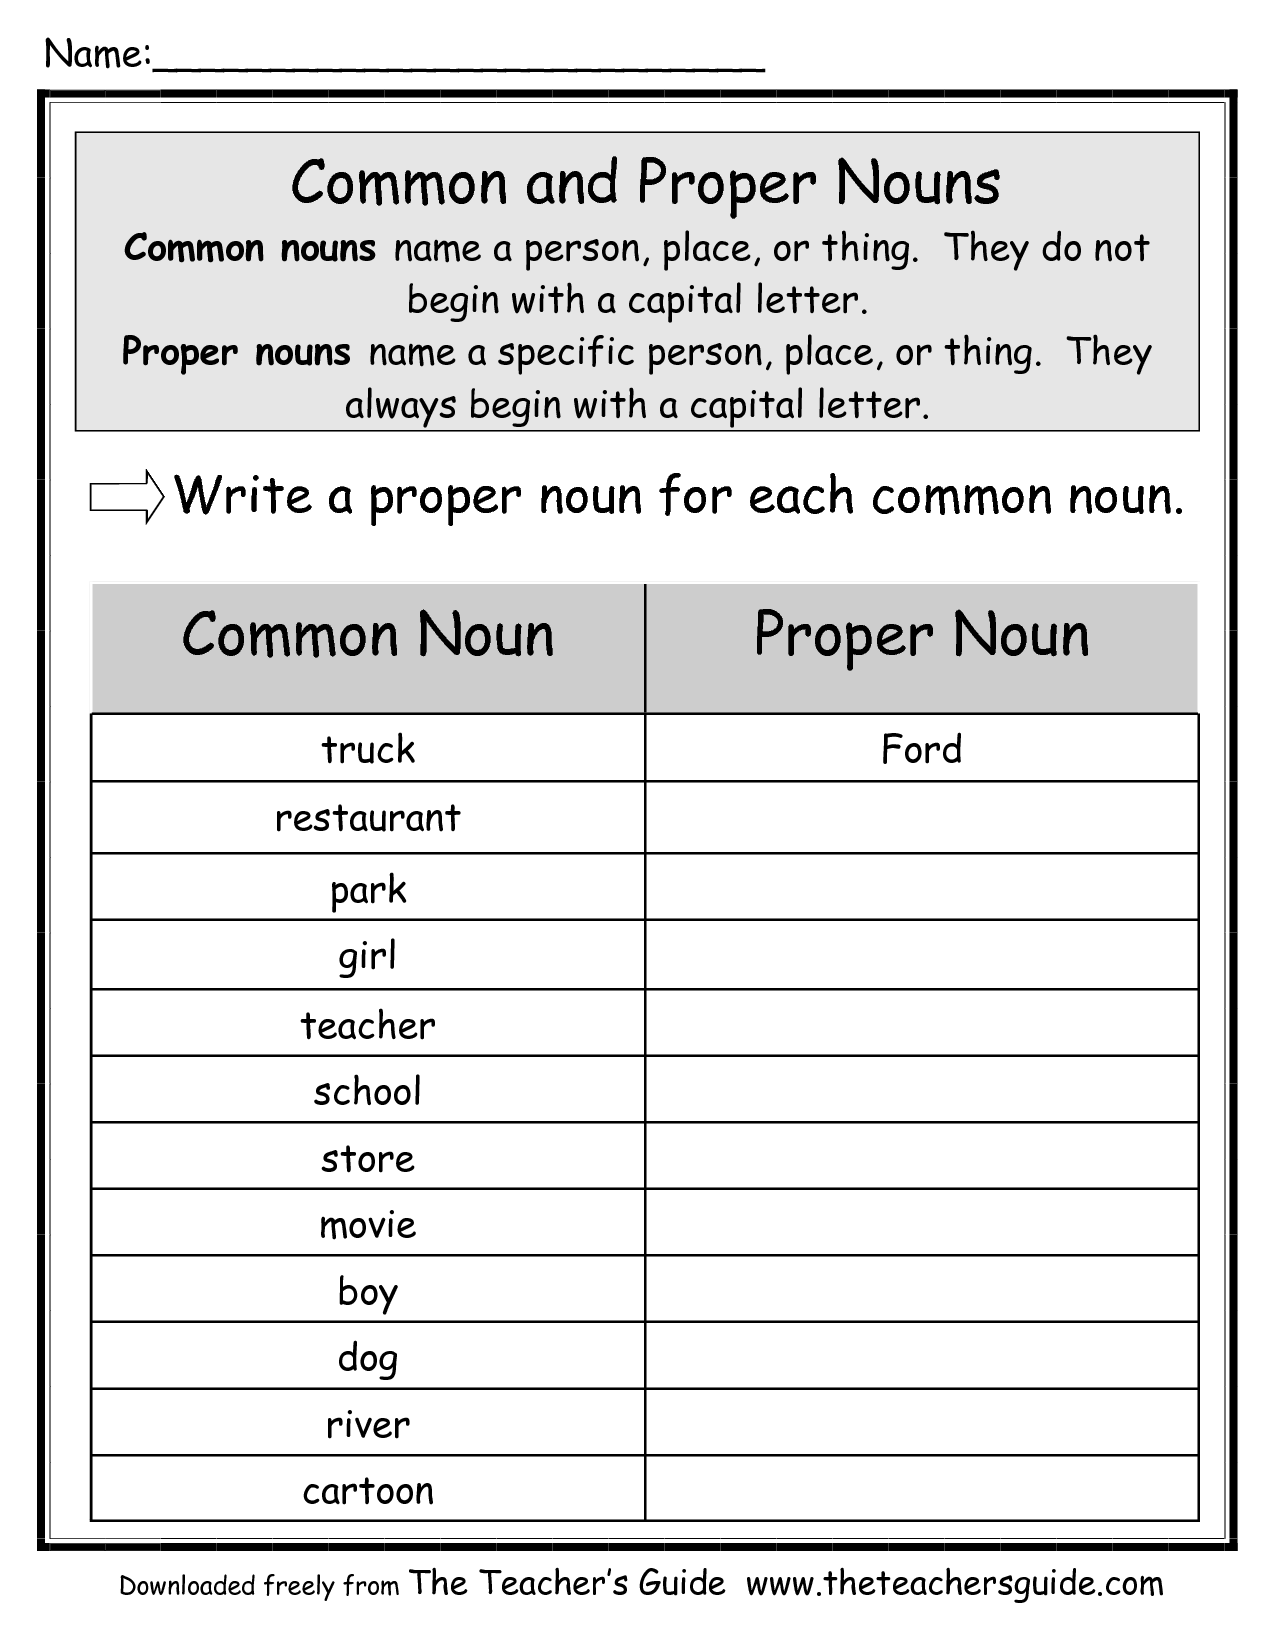 common-and-proper-nouns-nouns-worksheet-nouns-worksheet-proper-nouns-worksheet-common-and